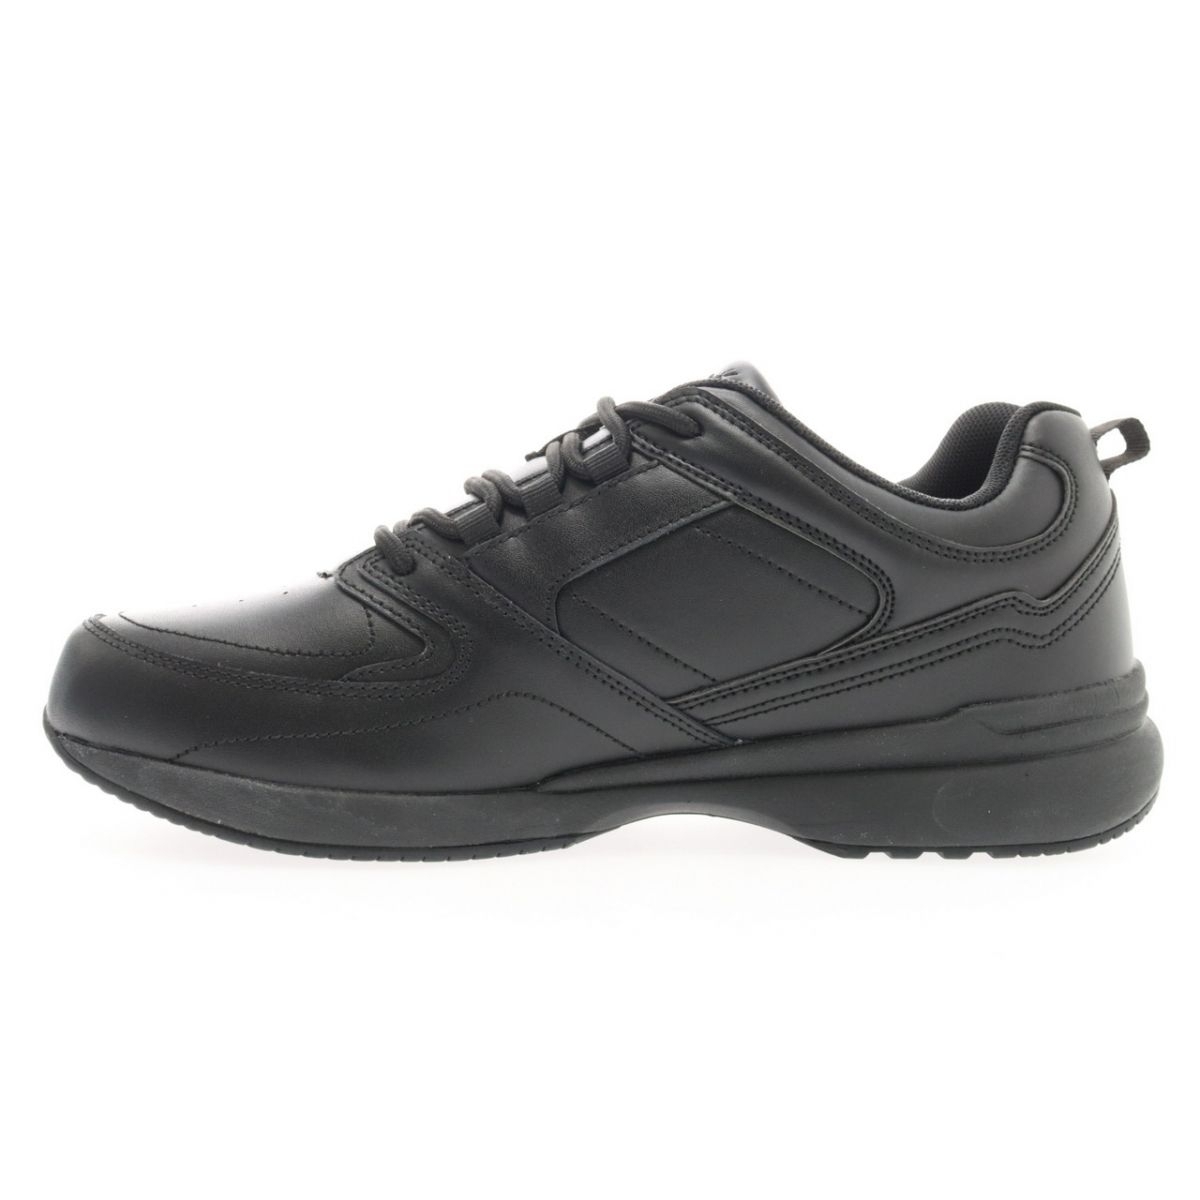 Propet Men's Life Walker Sport Sneaker Black - MAA272LBLK BLACK - BLACK, 9 Wide